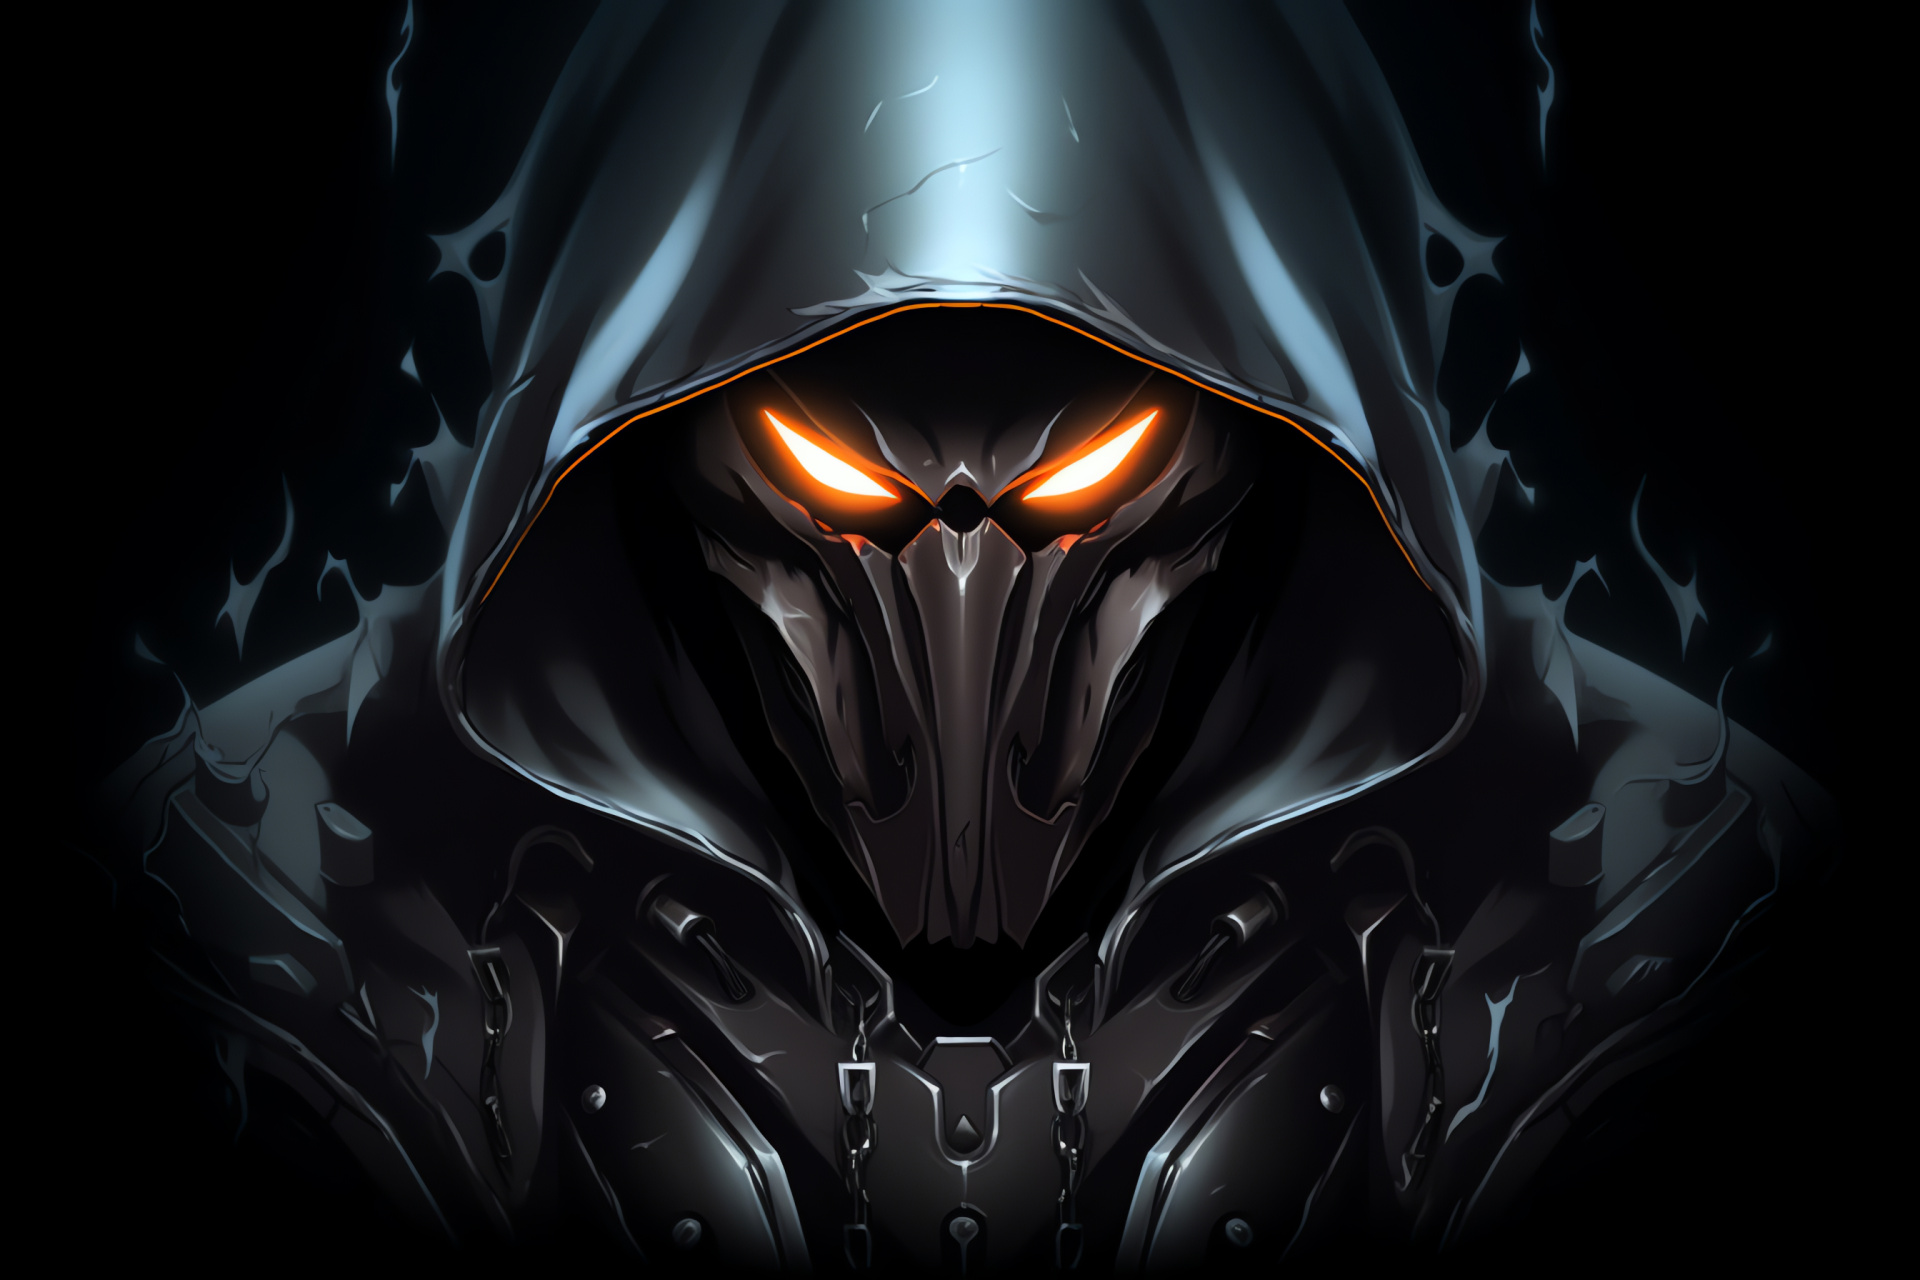 Overwatch Grimm Reaper, Luminous optic glow, Smirking menace, Morbid enigma, Ethereal phantom, HD Desktop Image